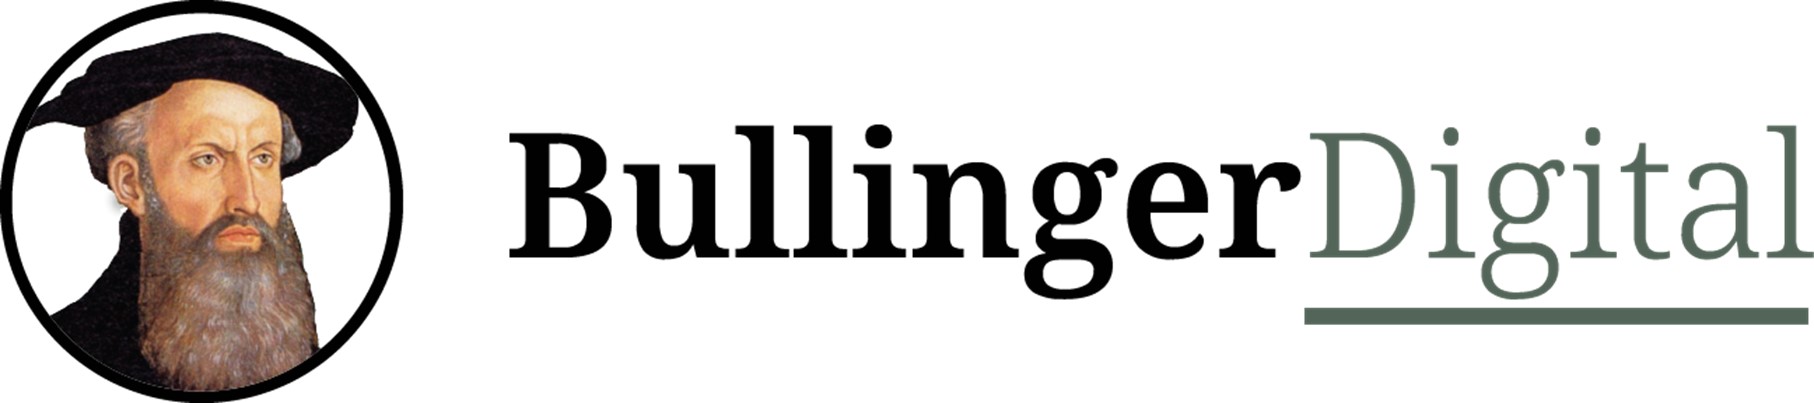 BullingerDigital project logo